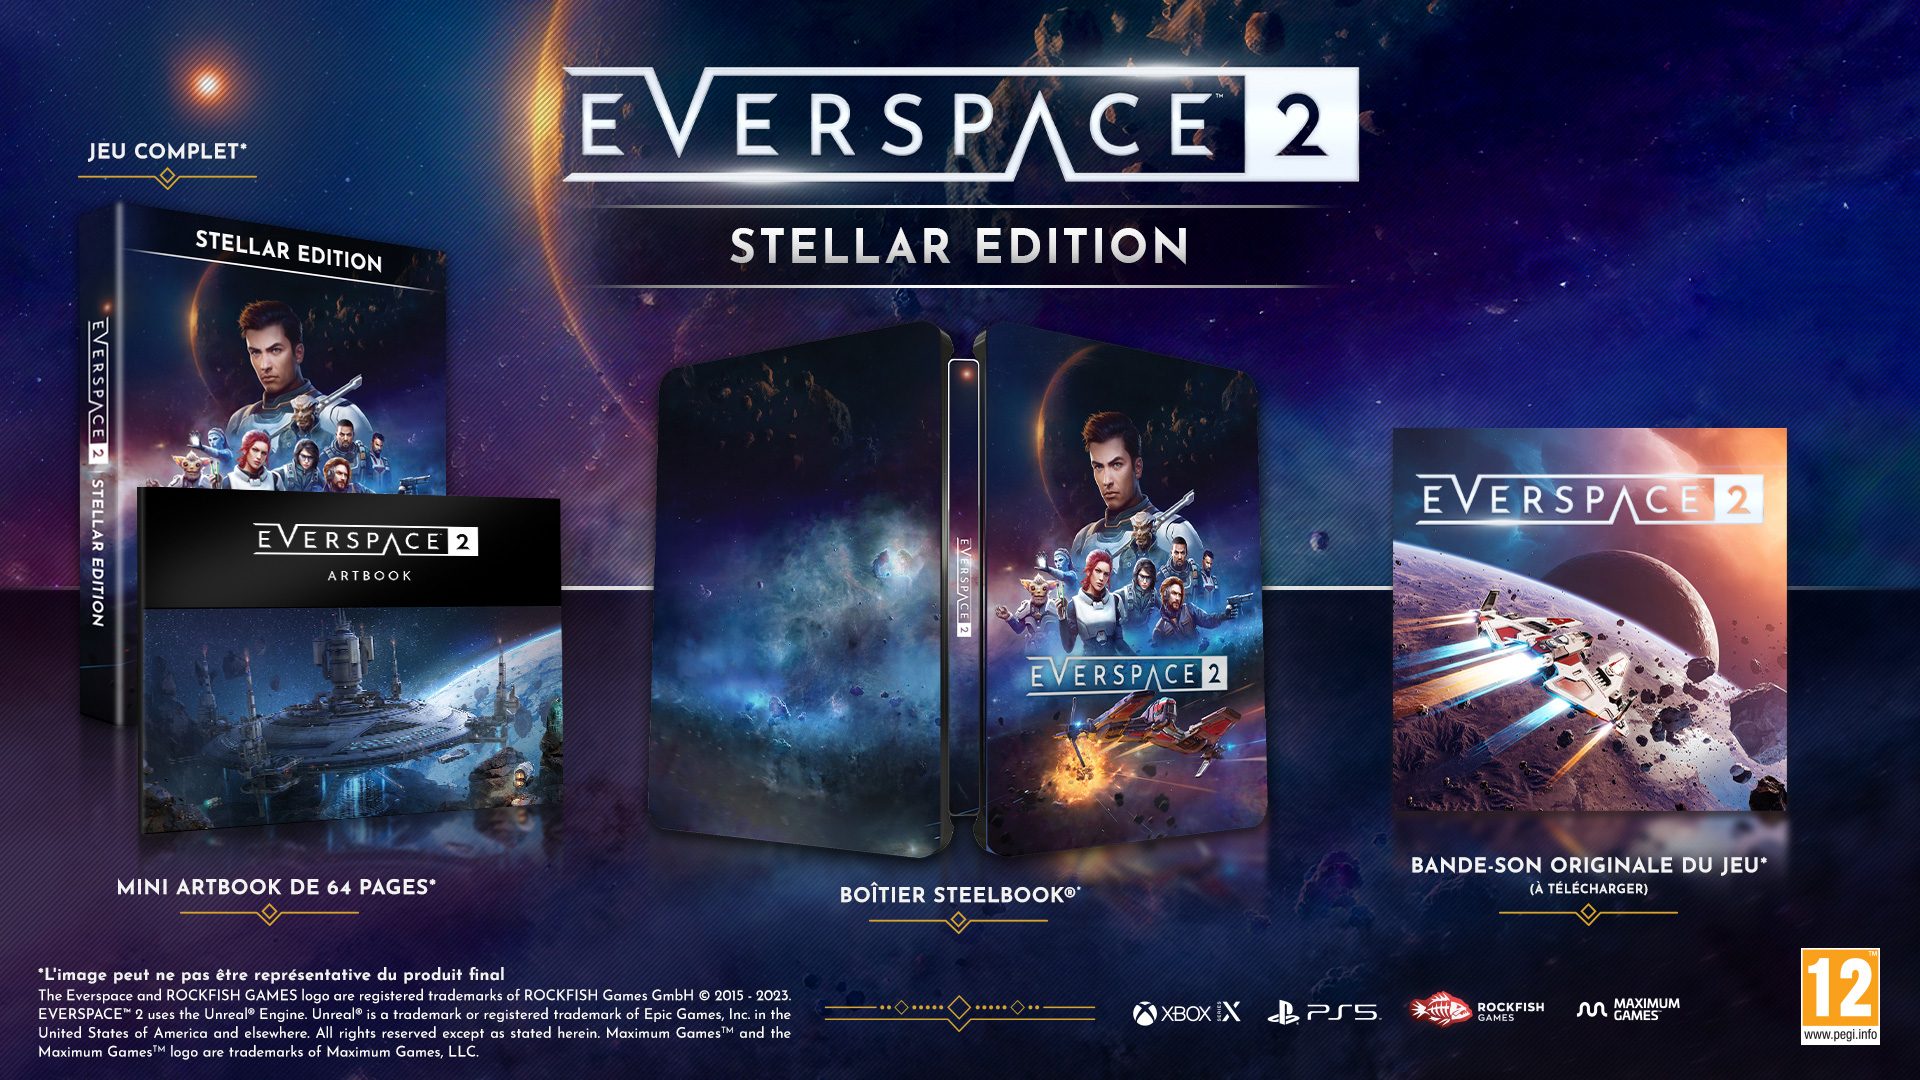 EVERSPACE 2 Stellar Edition